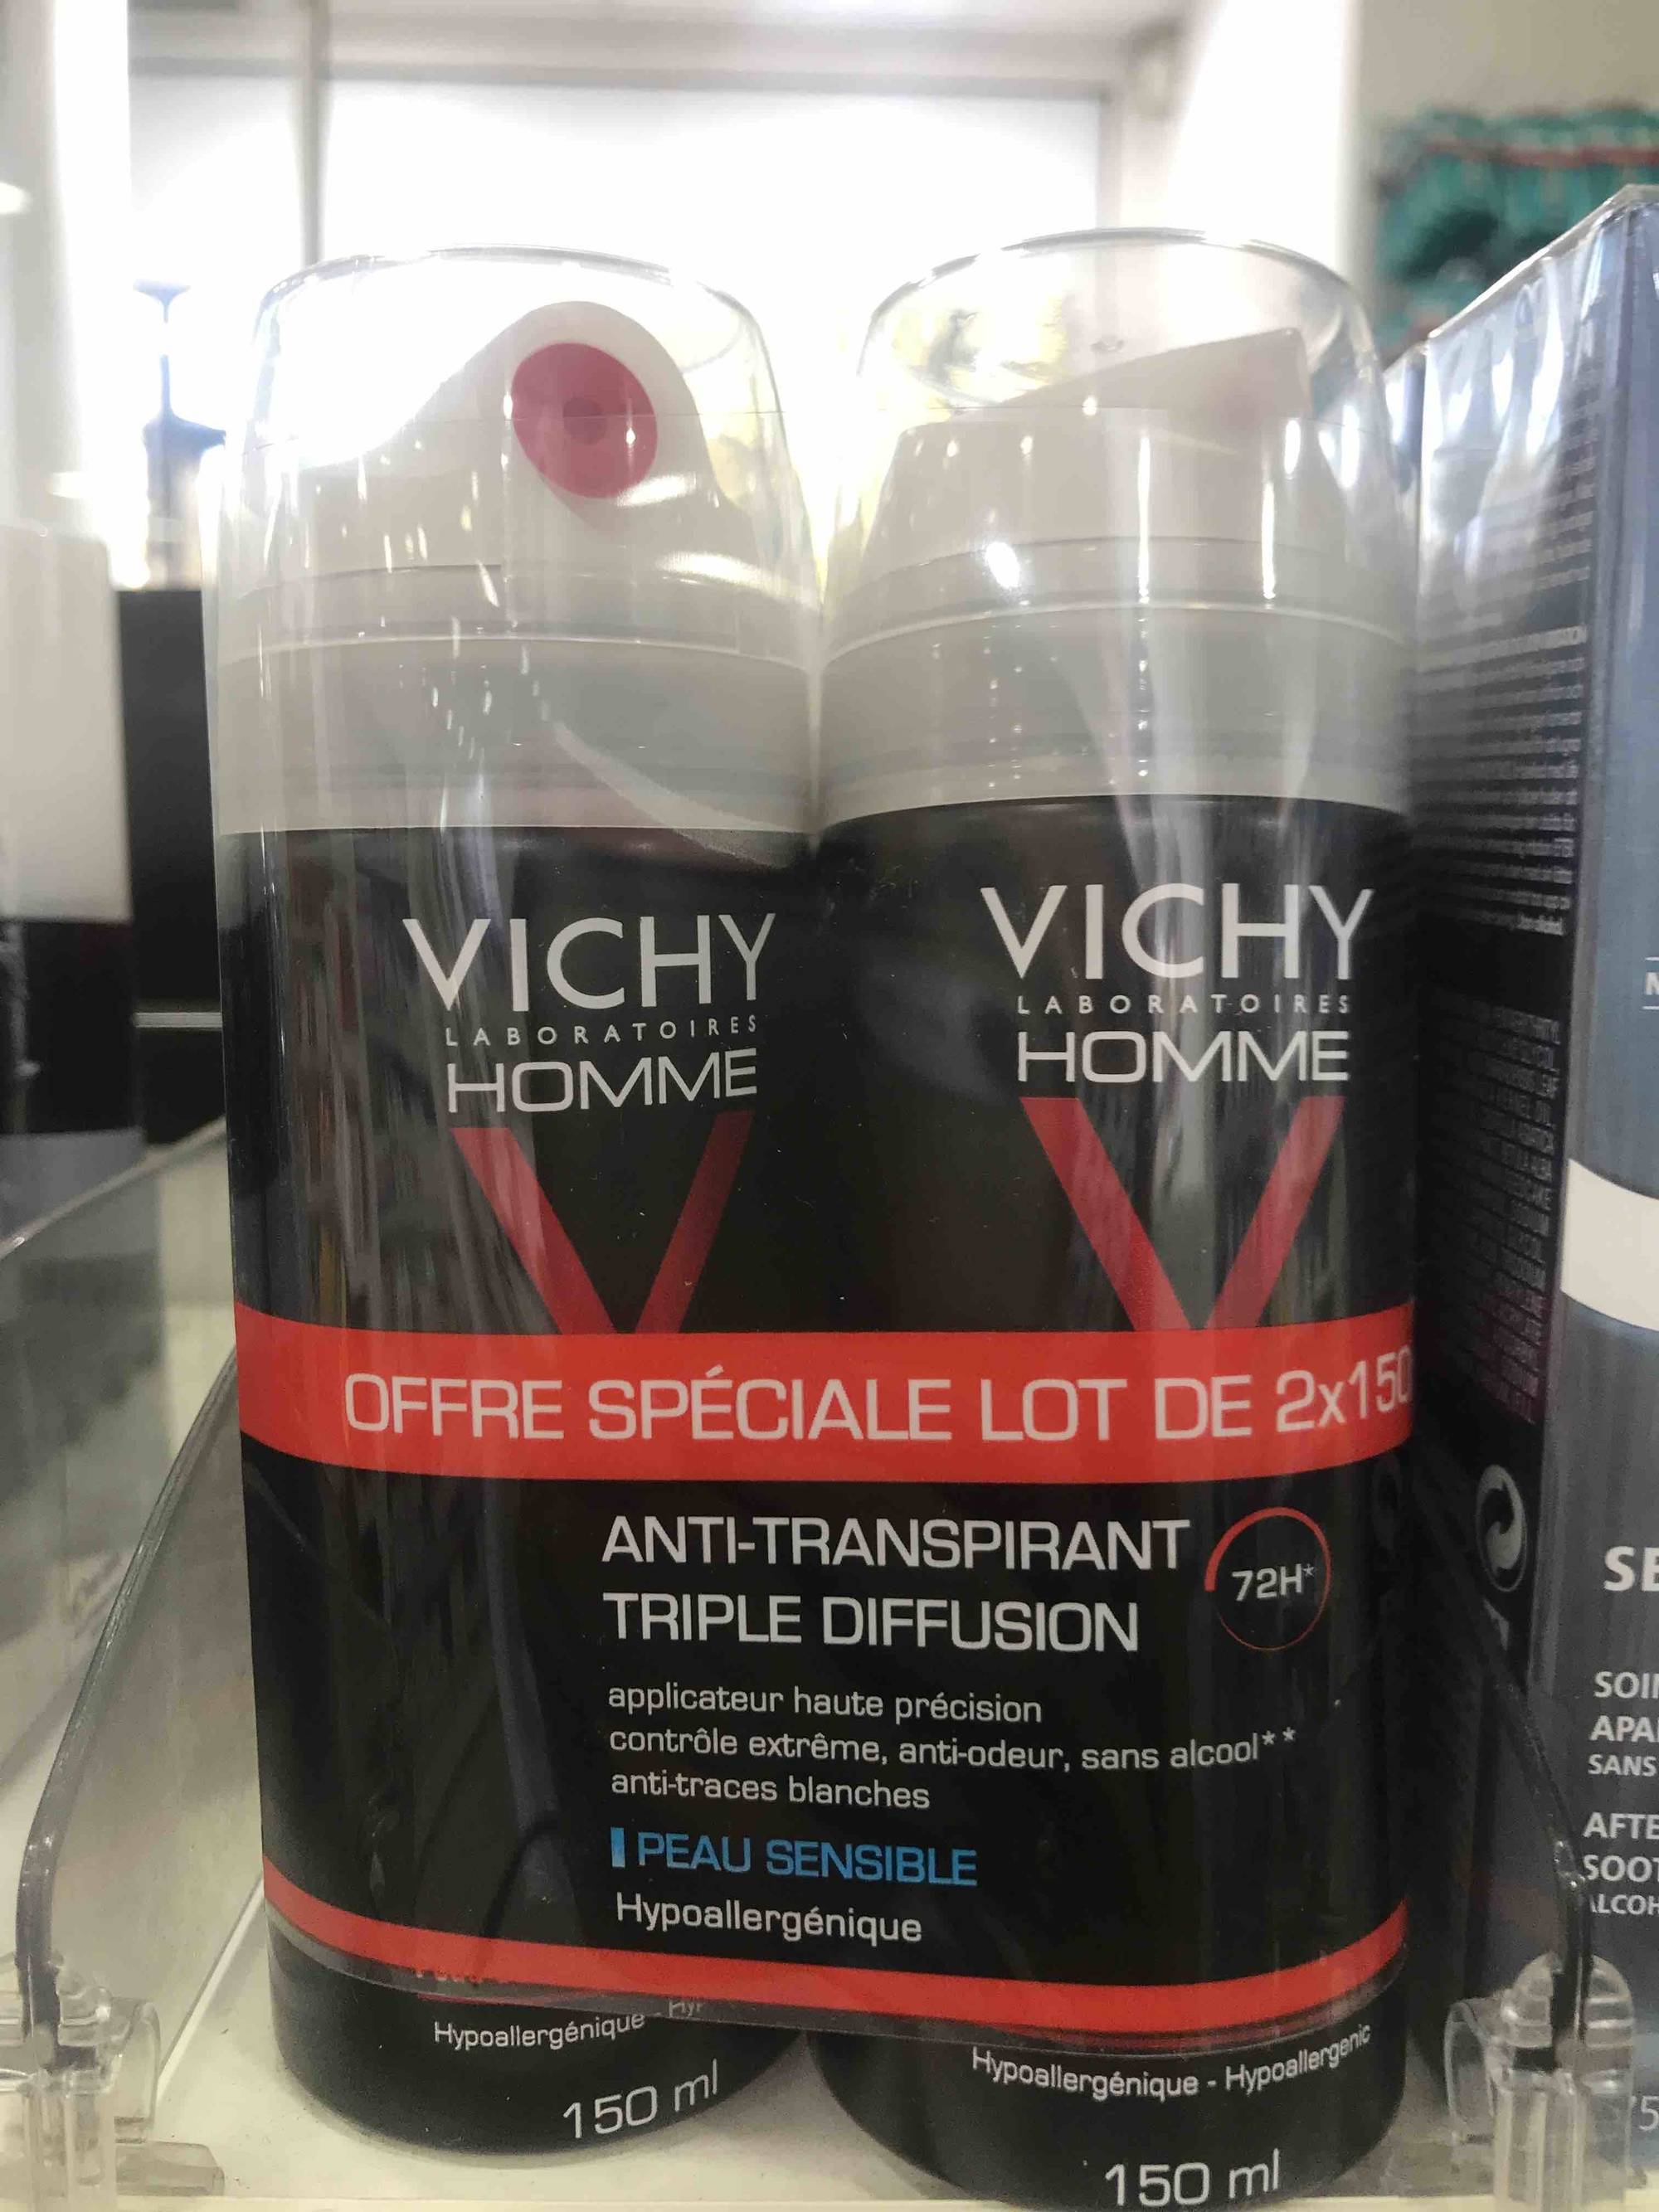 VICHY - Homme - Anti-transpirant 72h